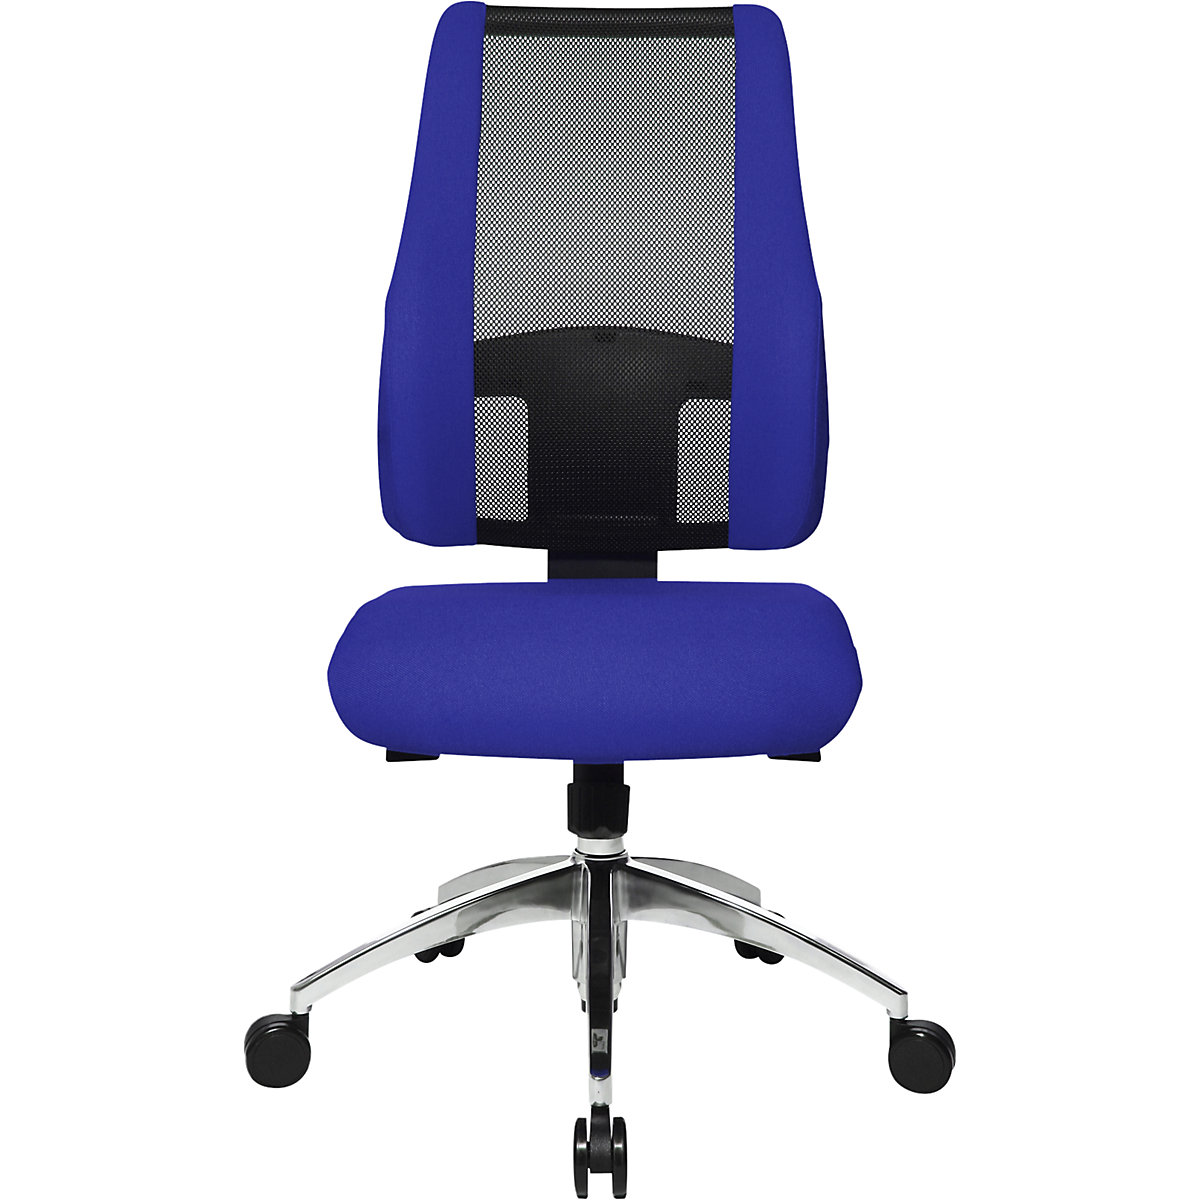 AIR SYNCRO office swivel chair – Topstar